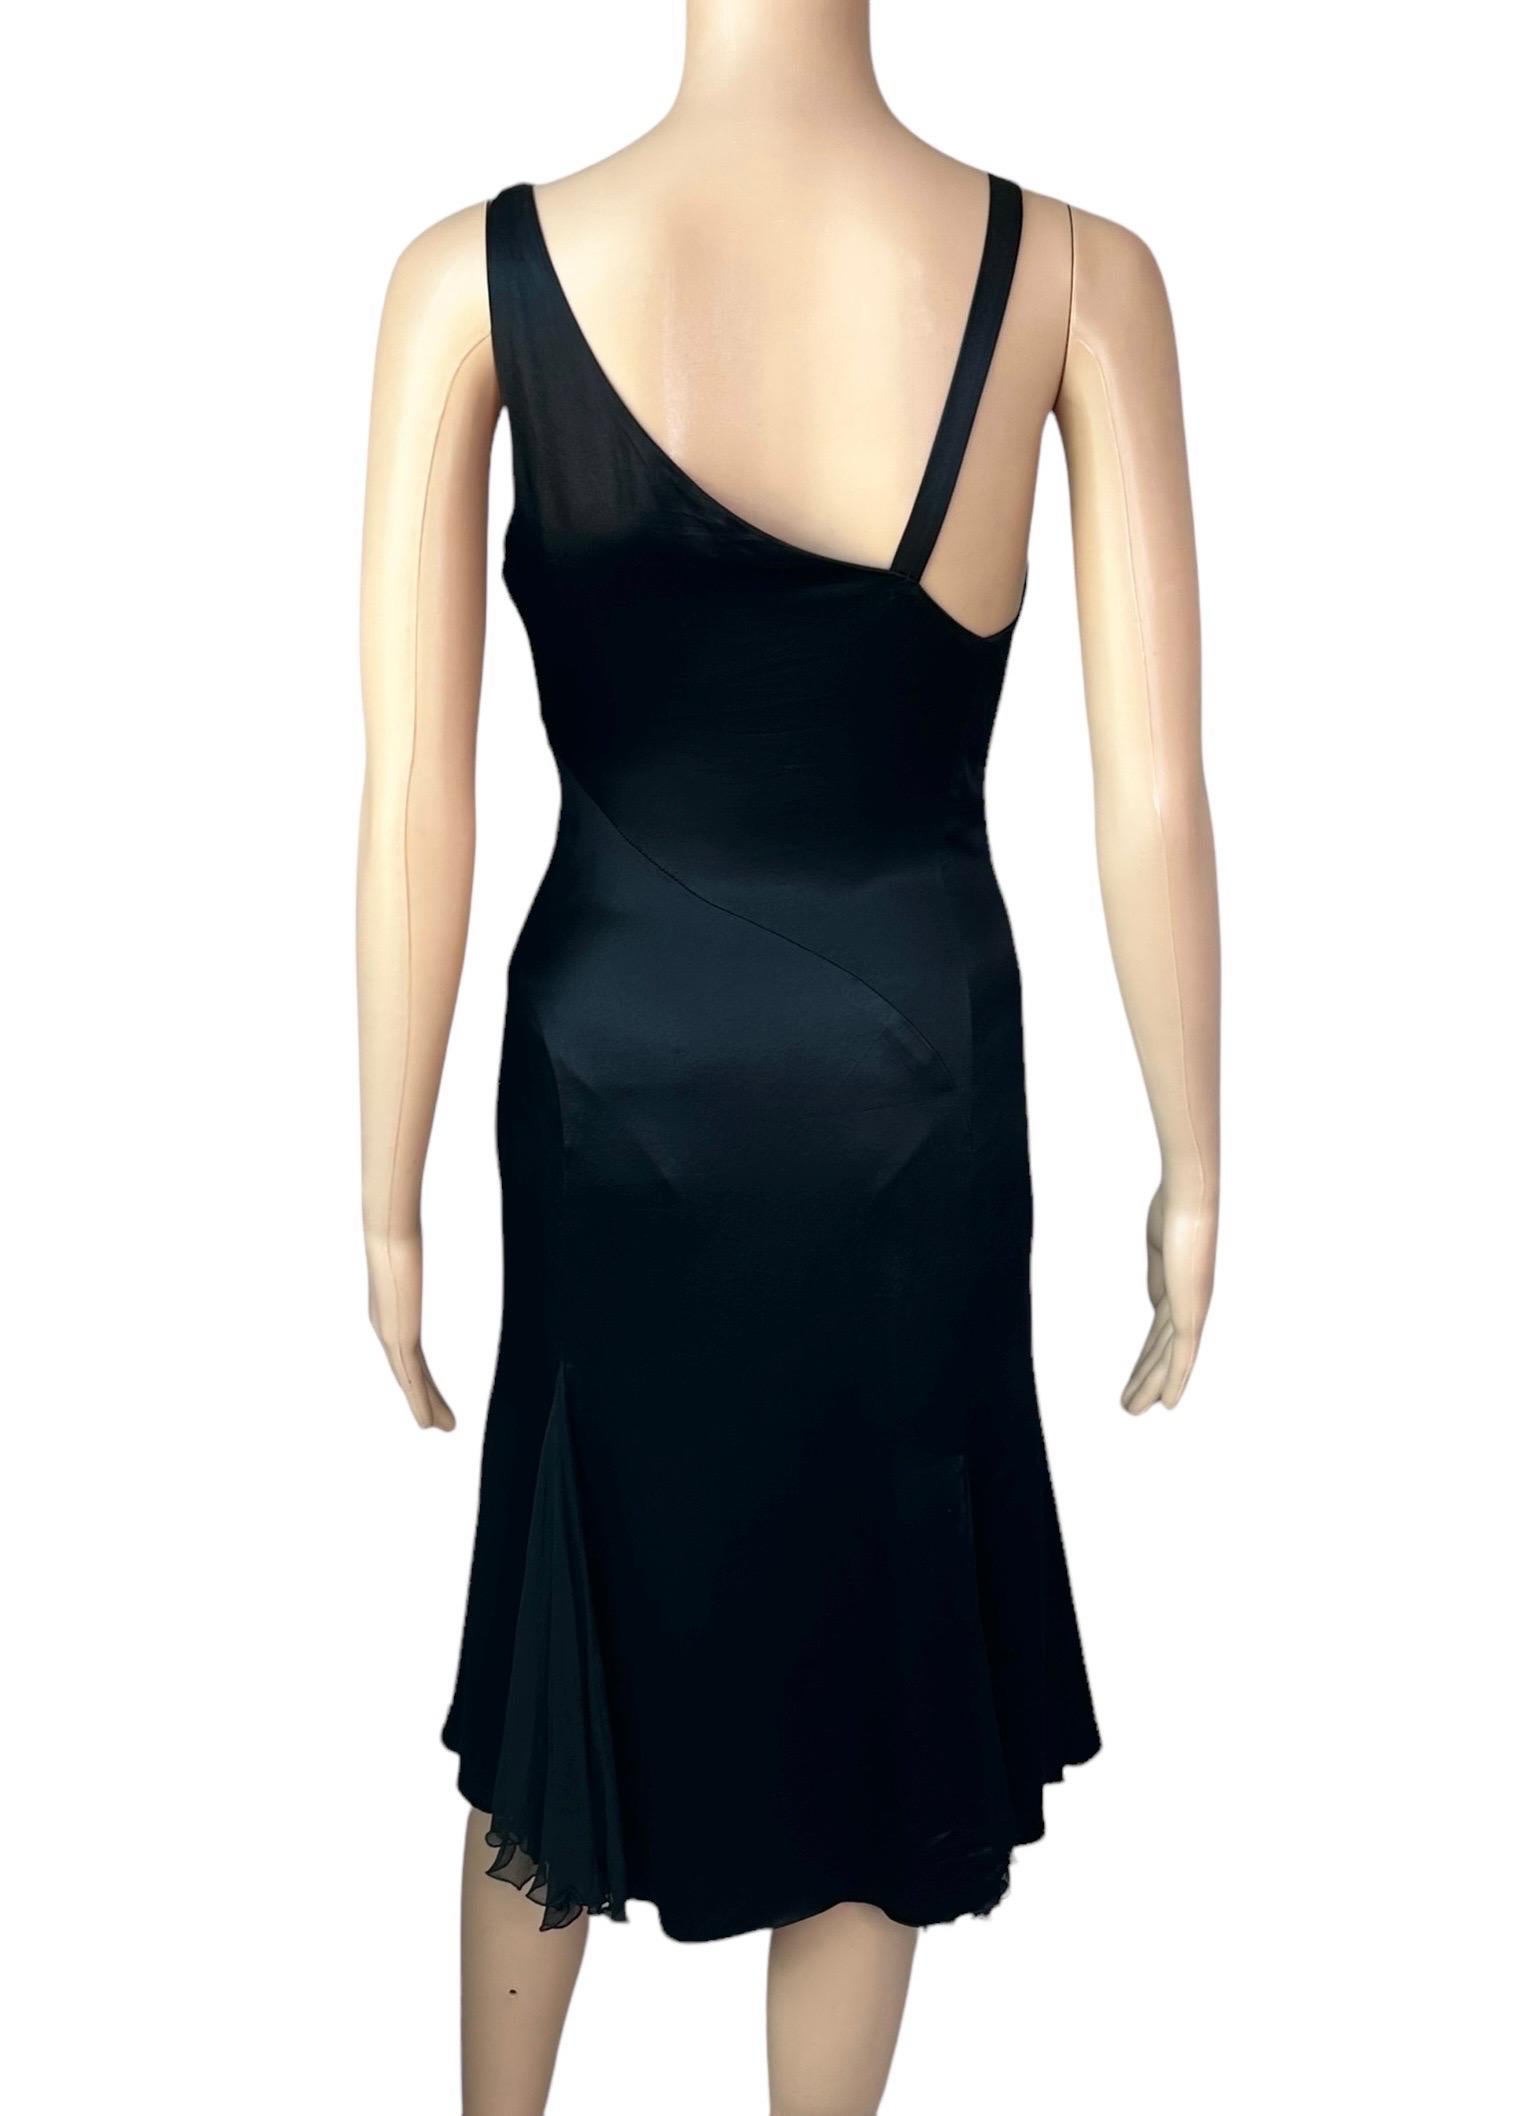 Versace F/W 2004 Embellished Buckle Studded Detail Plunging Black Evening Dress For Sale 1